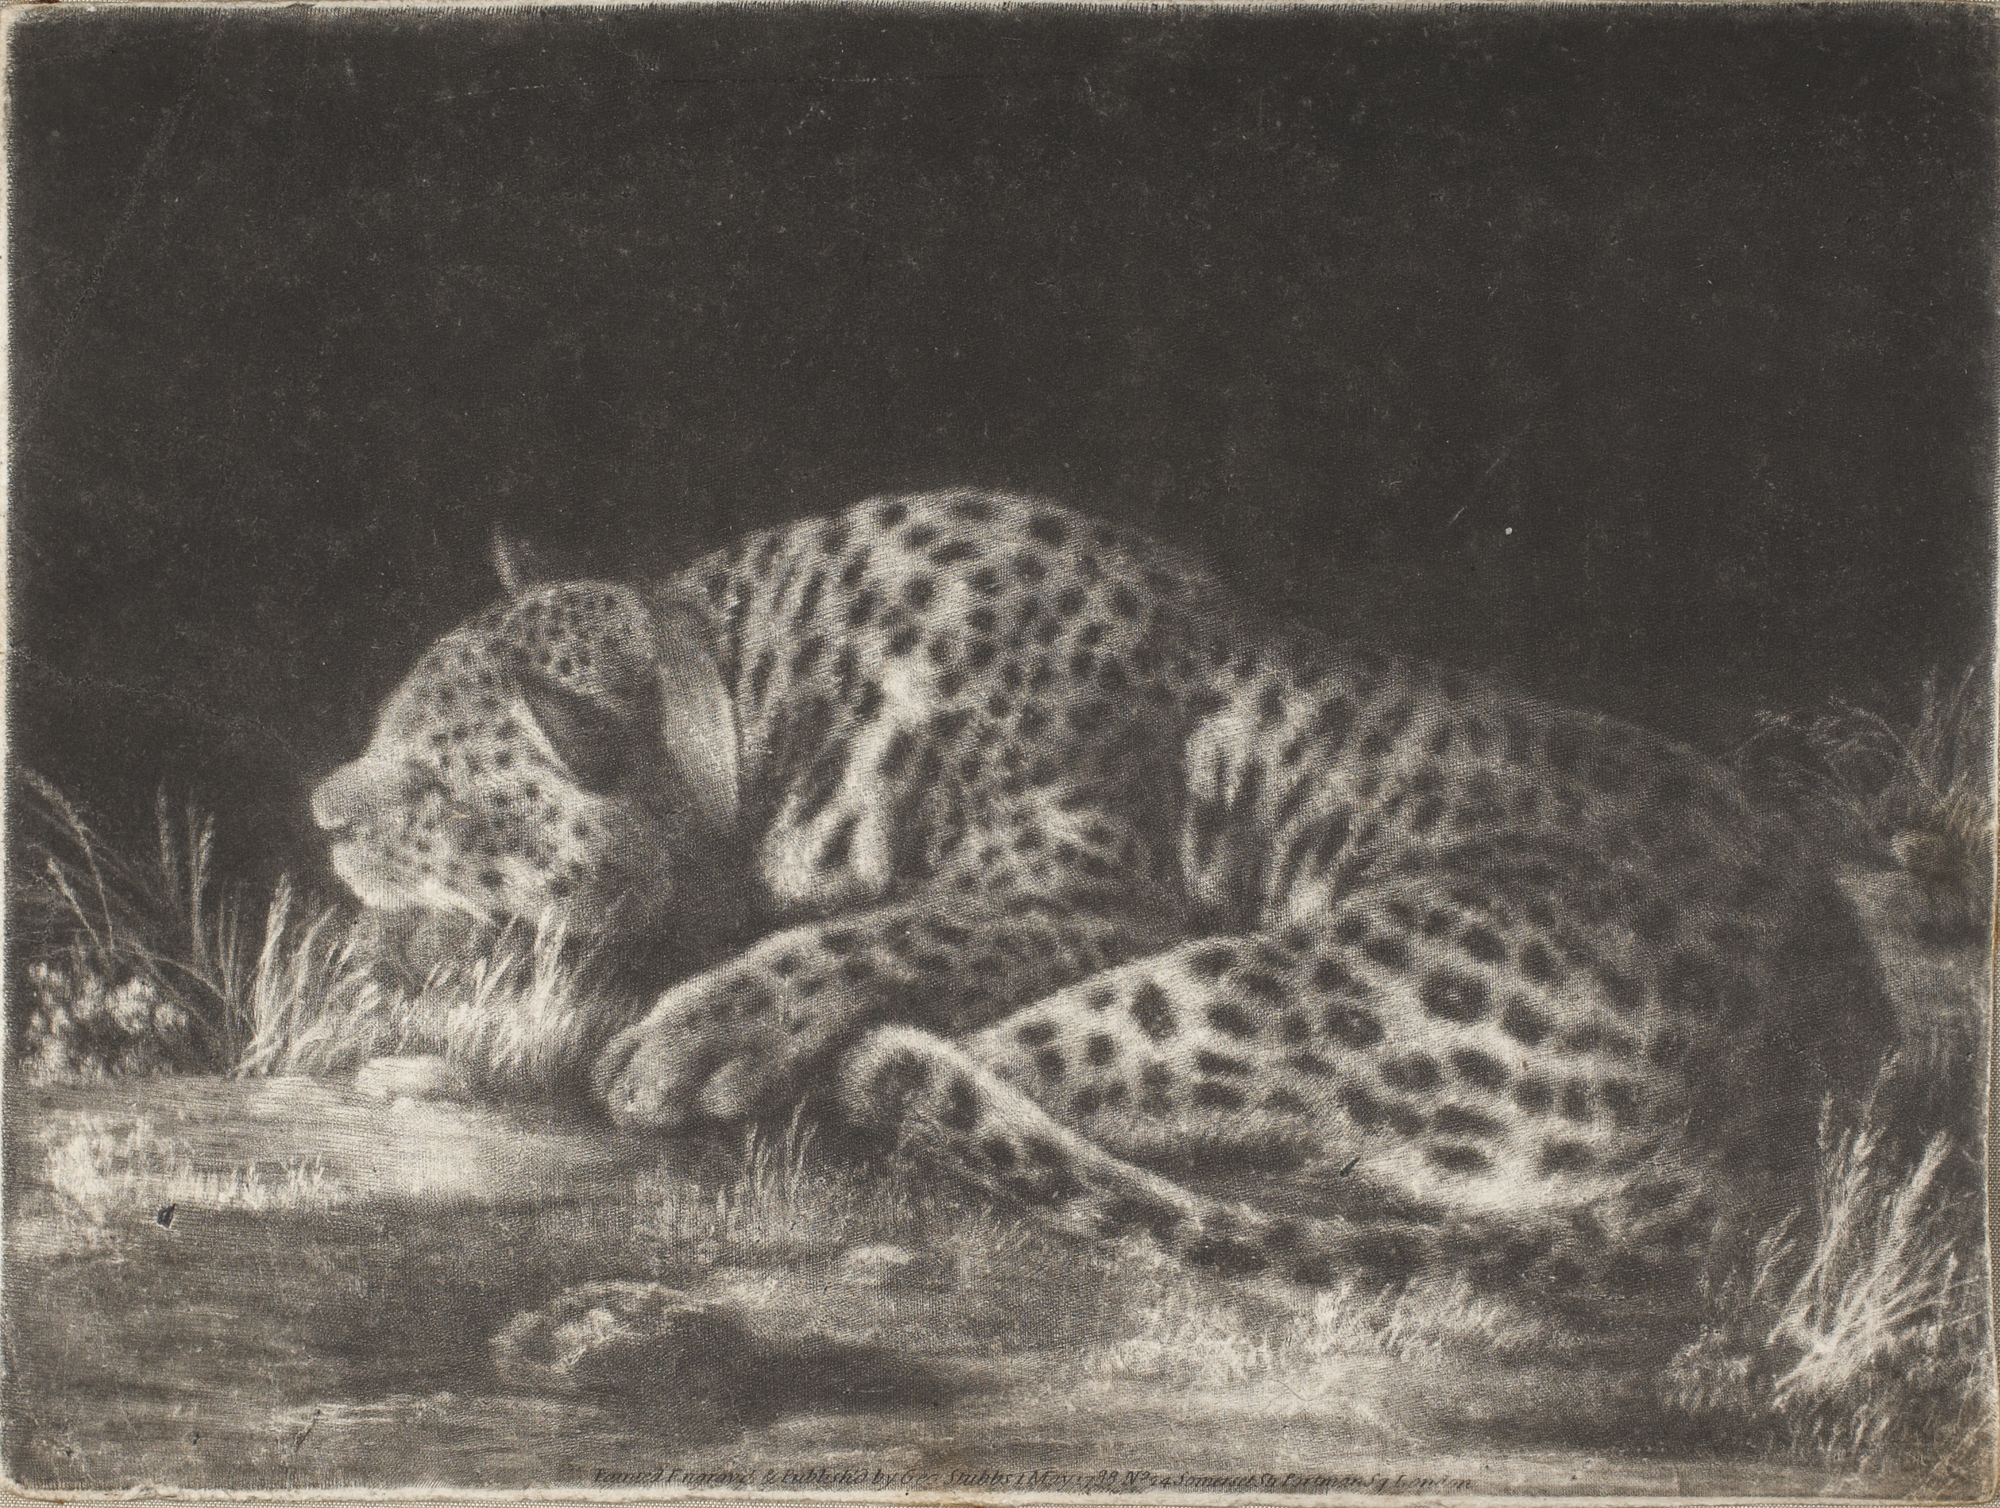 George Stubbs, British, 1724–1806: A Sleeping Cheetah ("A Tyger"), 1788 (2010-165).